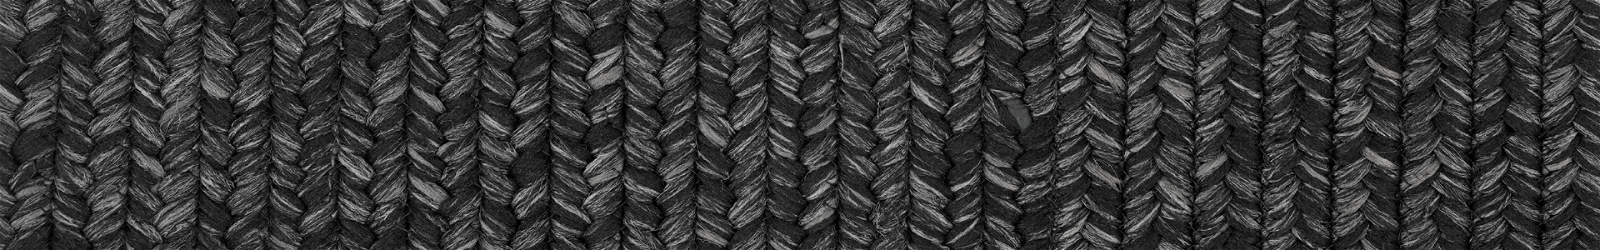 Oval - Black Braided Rugs